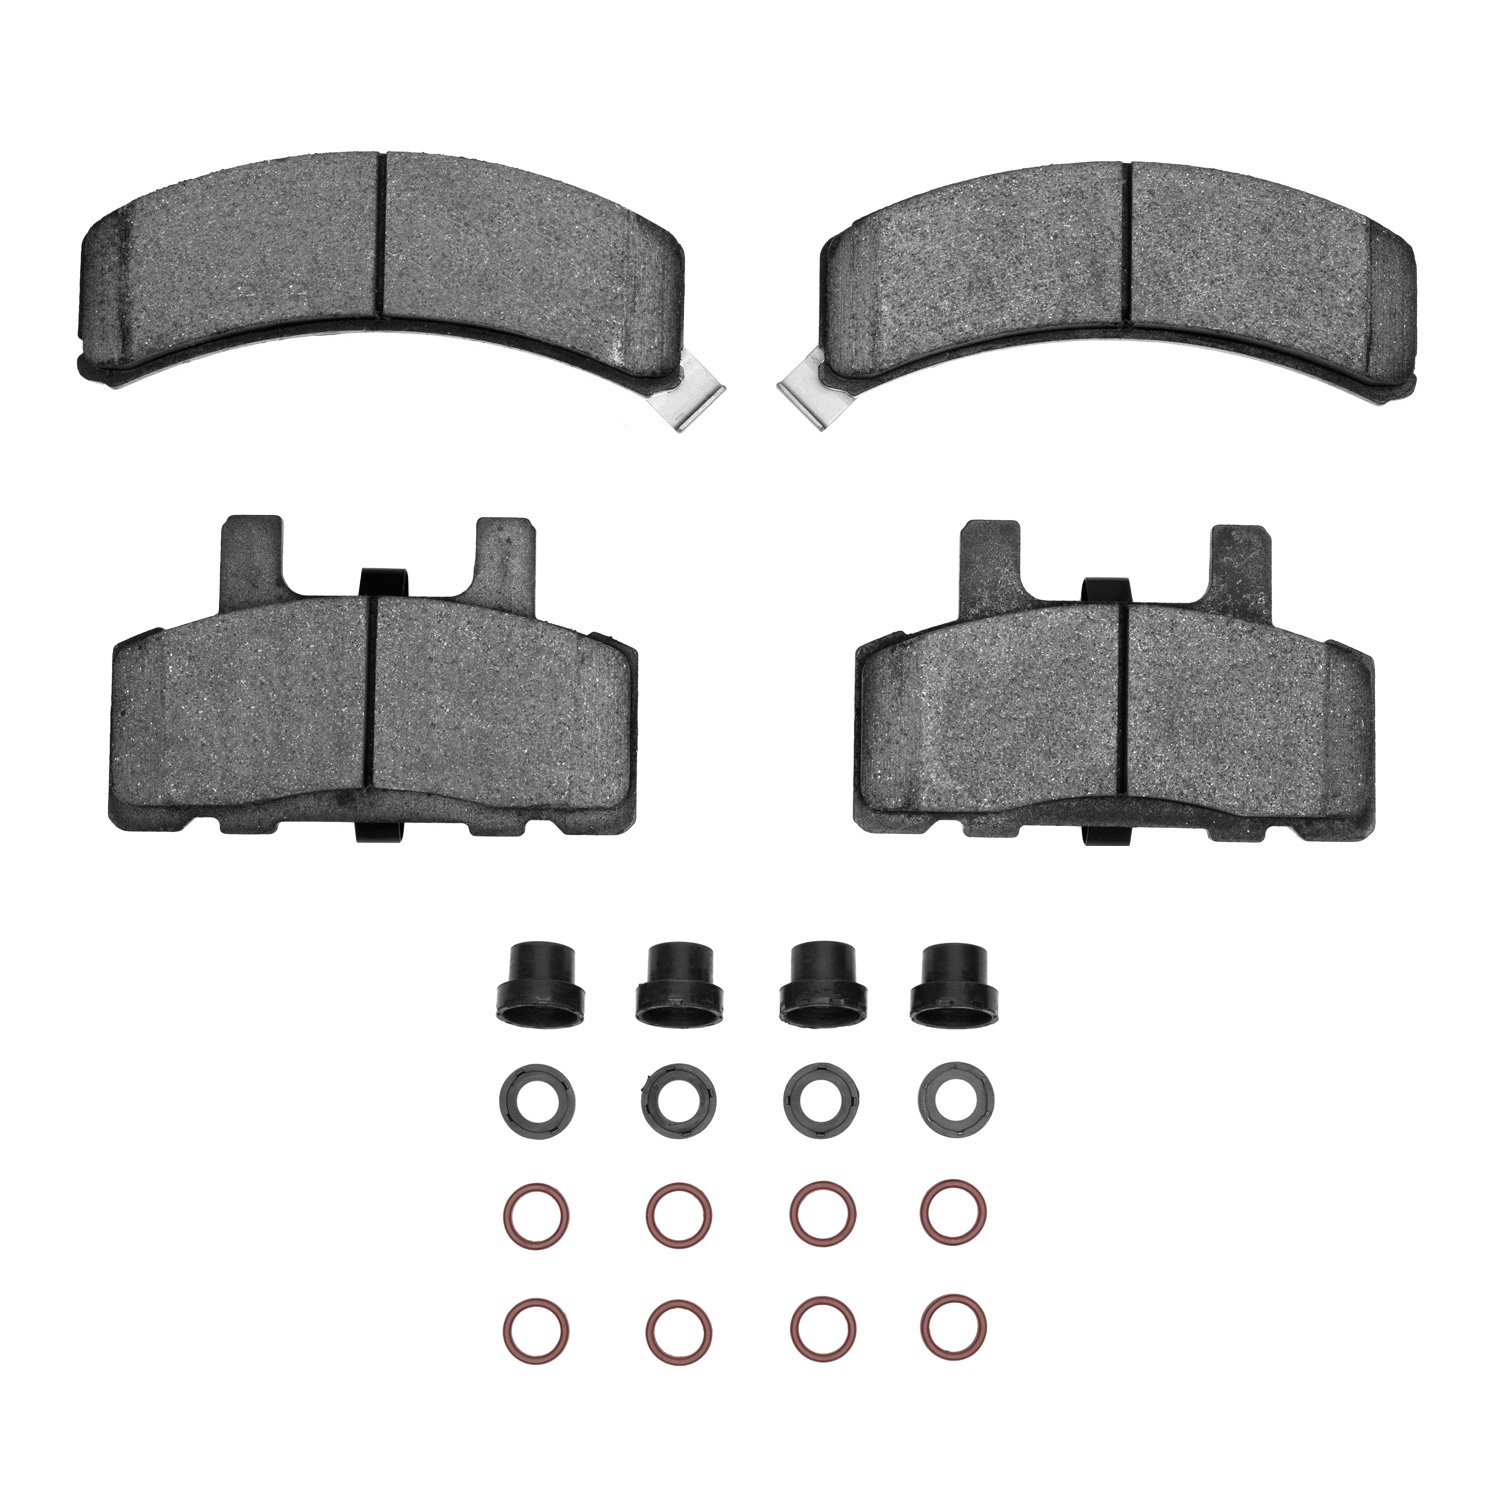 1310-0369-01 3000-Series Ceramic Brake Pads & Hardware Kit, 1988-2002 Multiple Makes/Models, Position: Front